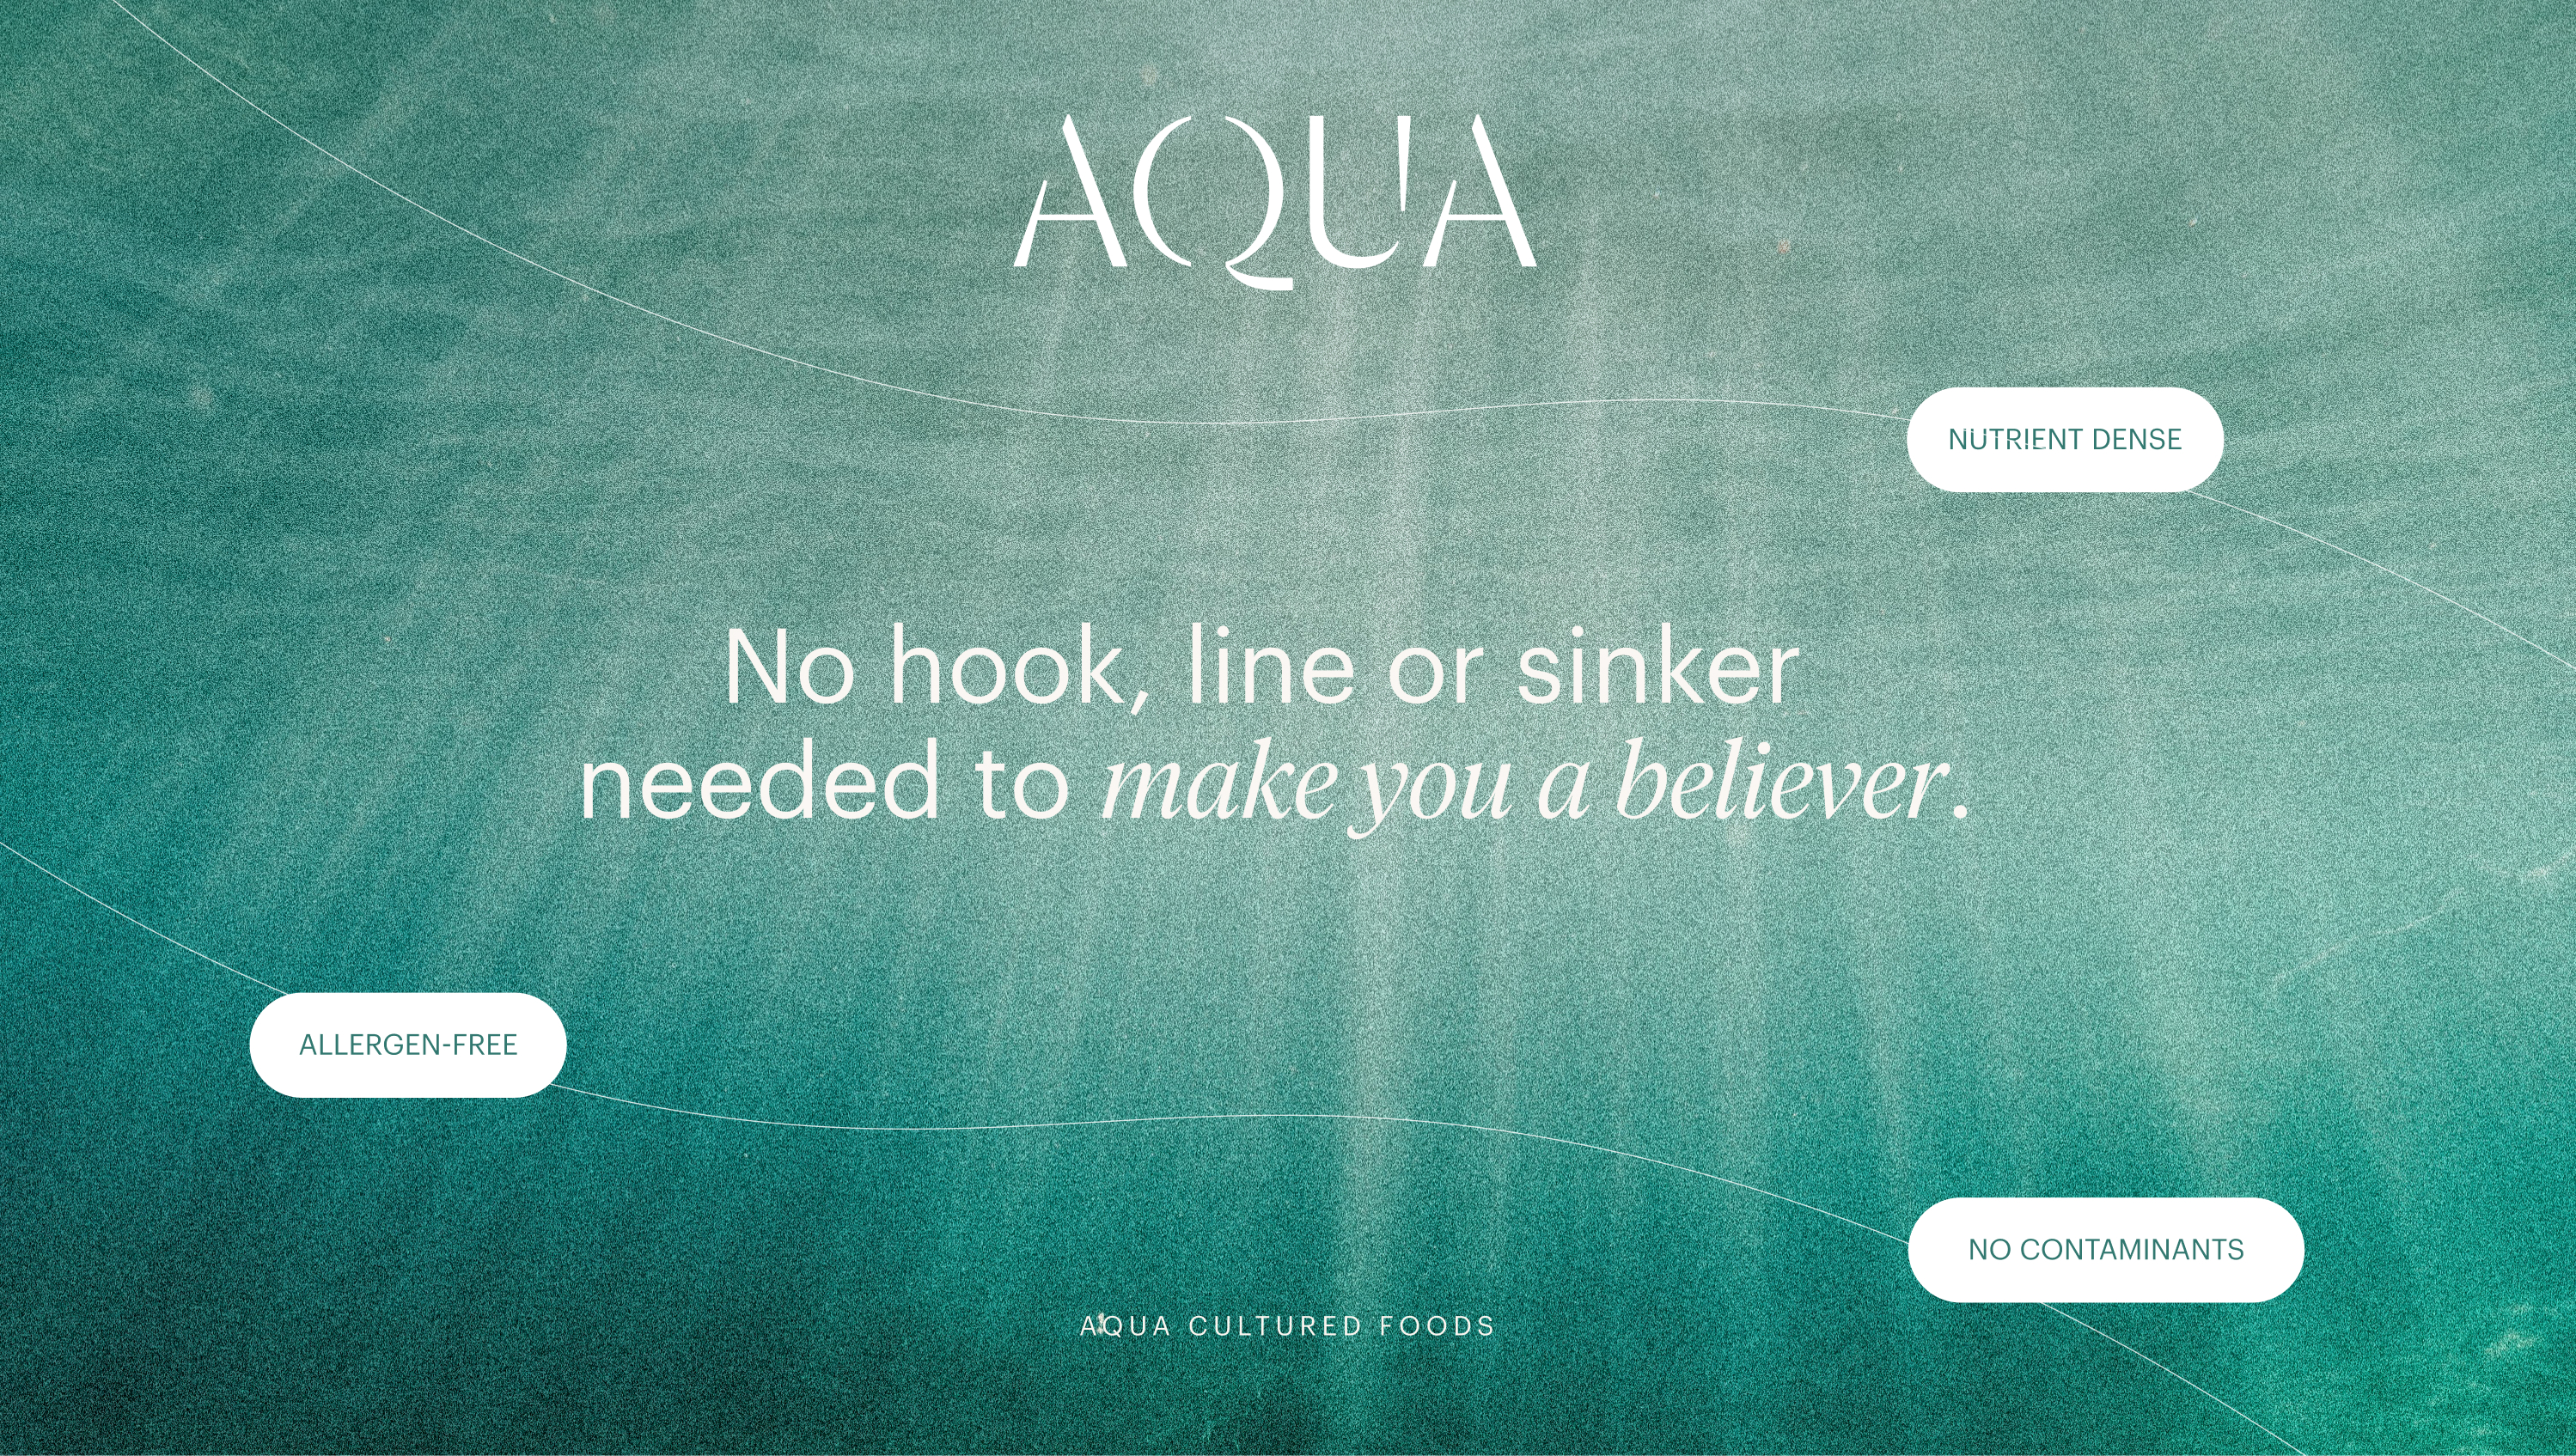 AQUA - No hook, line or sinker needed to make you a believer.